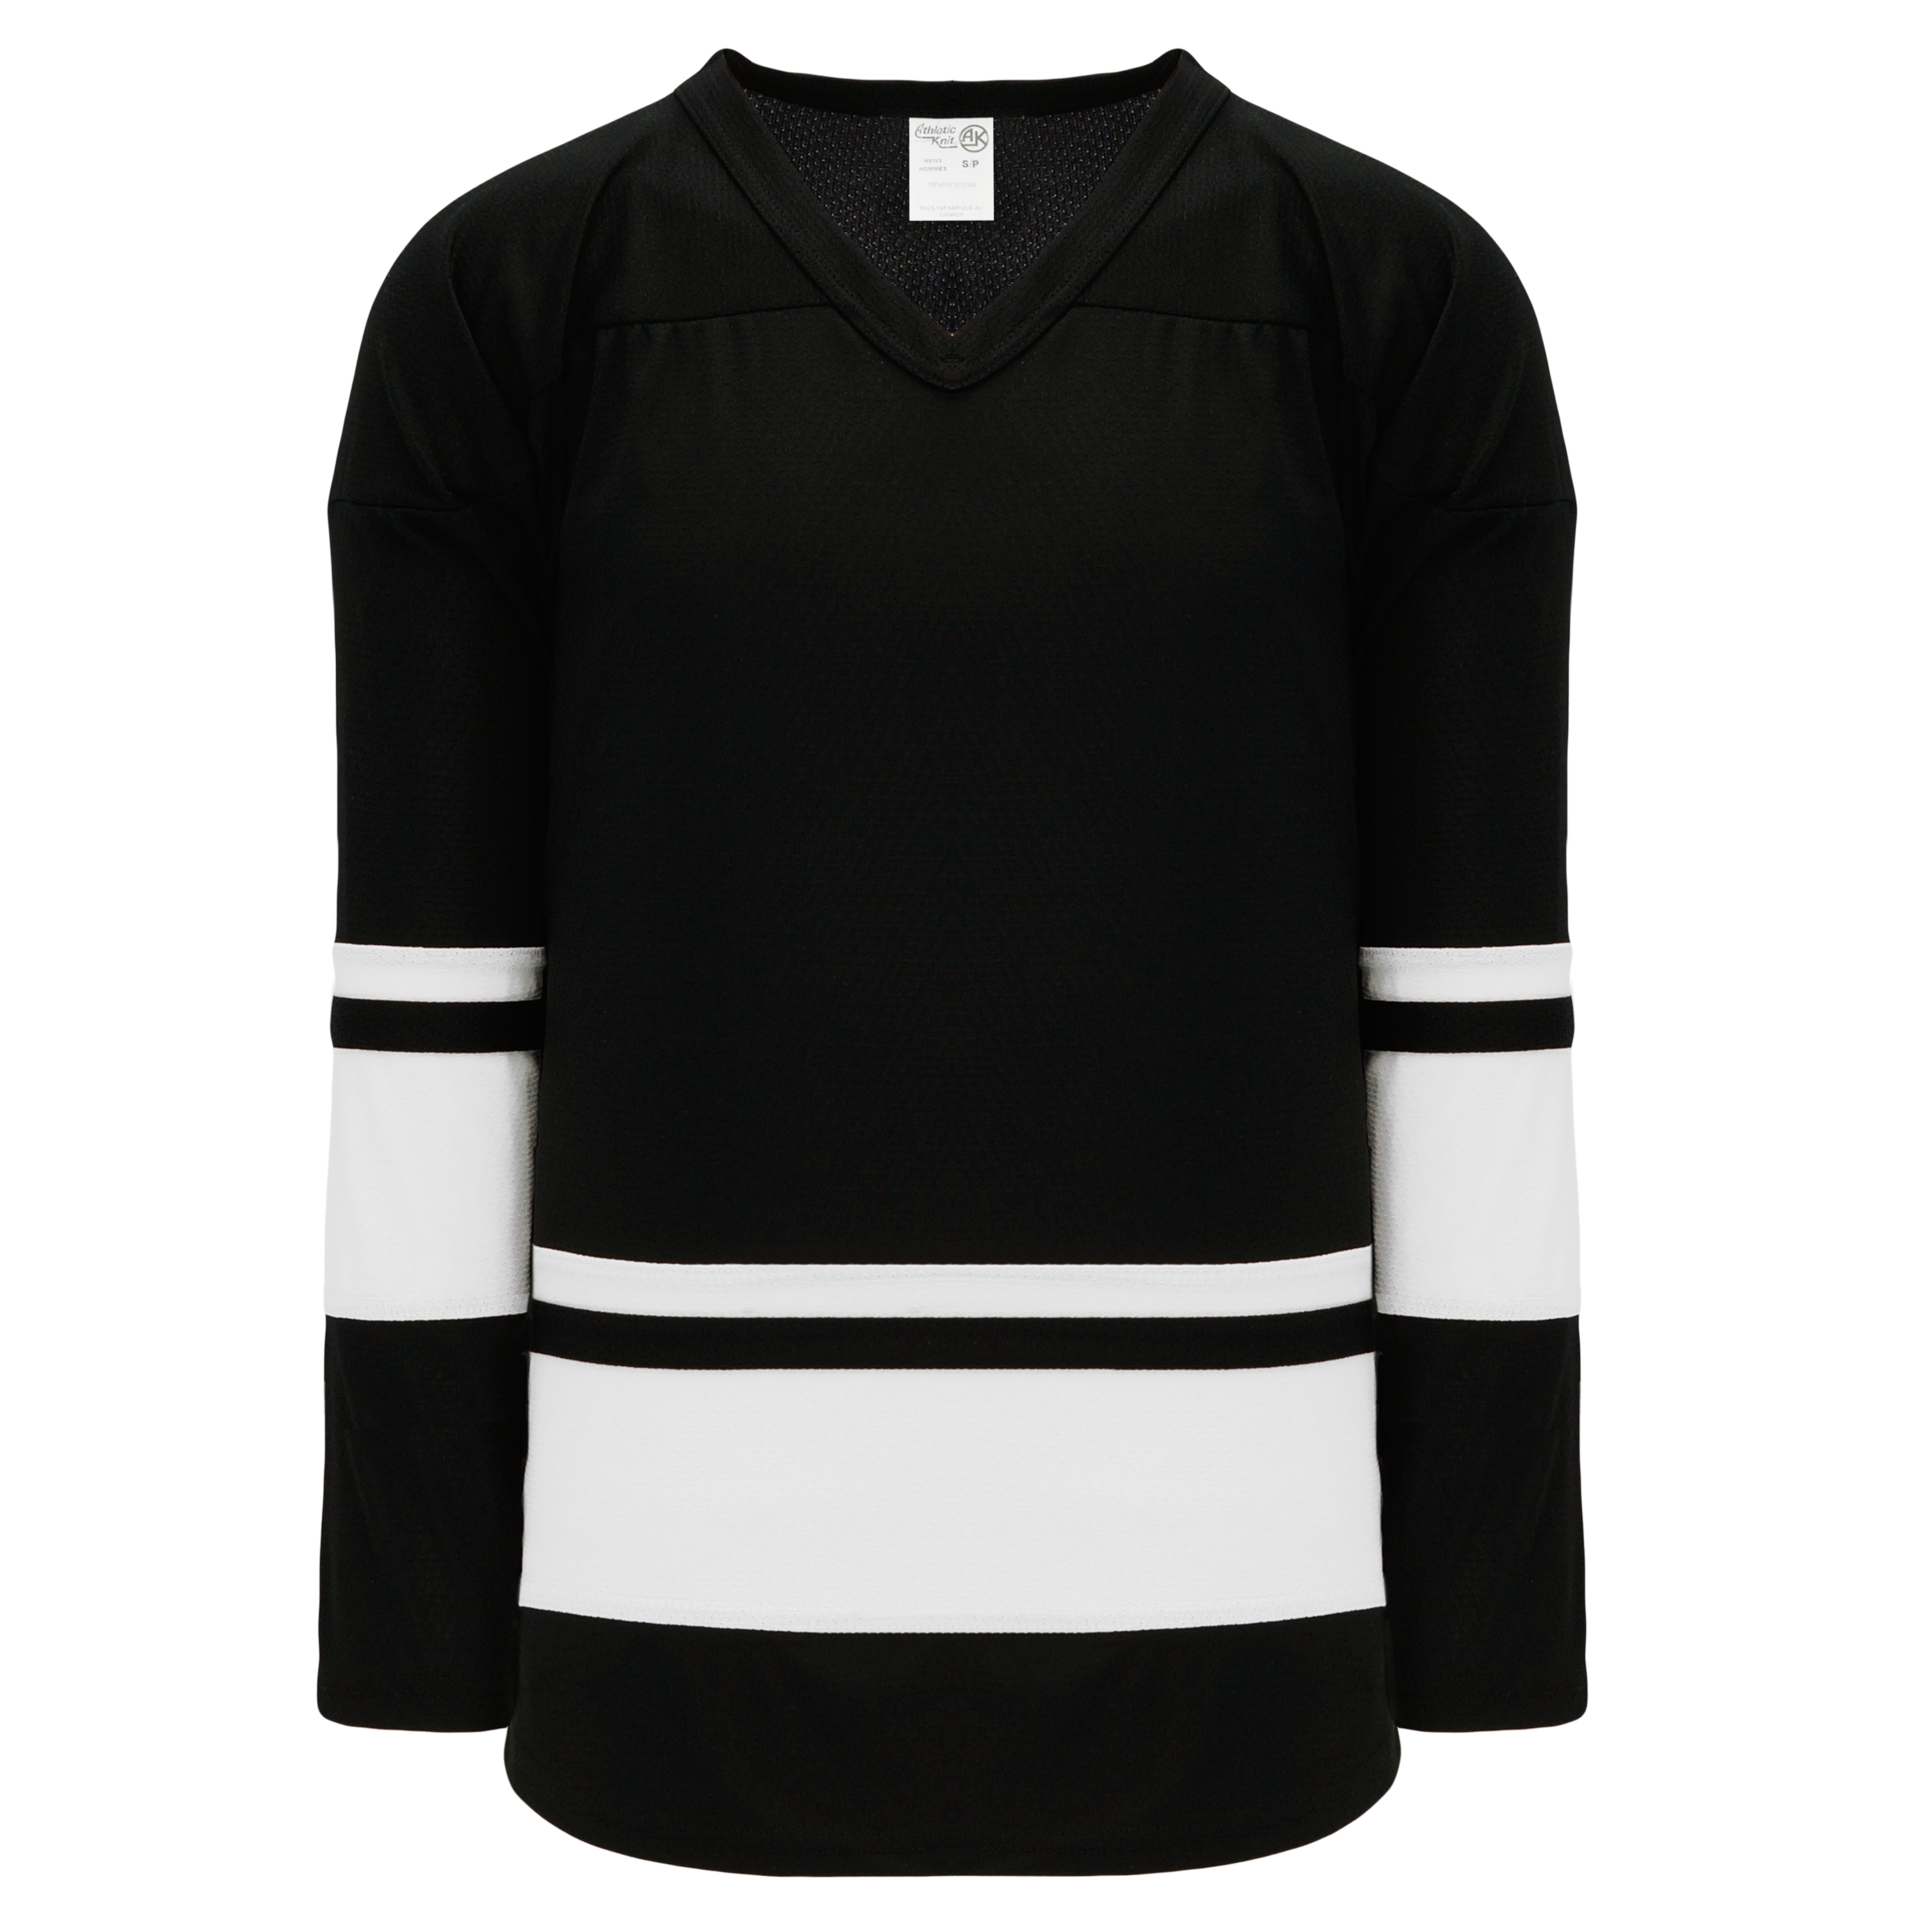 Vintage AK Athletic Knit Hockey Jersey Blank Mens Medium Chicago Blackhawks